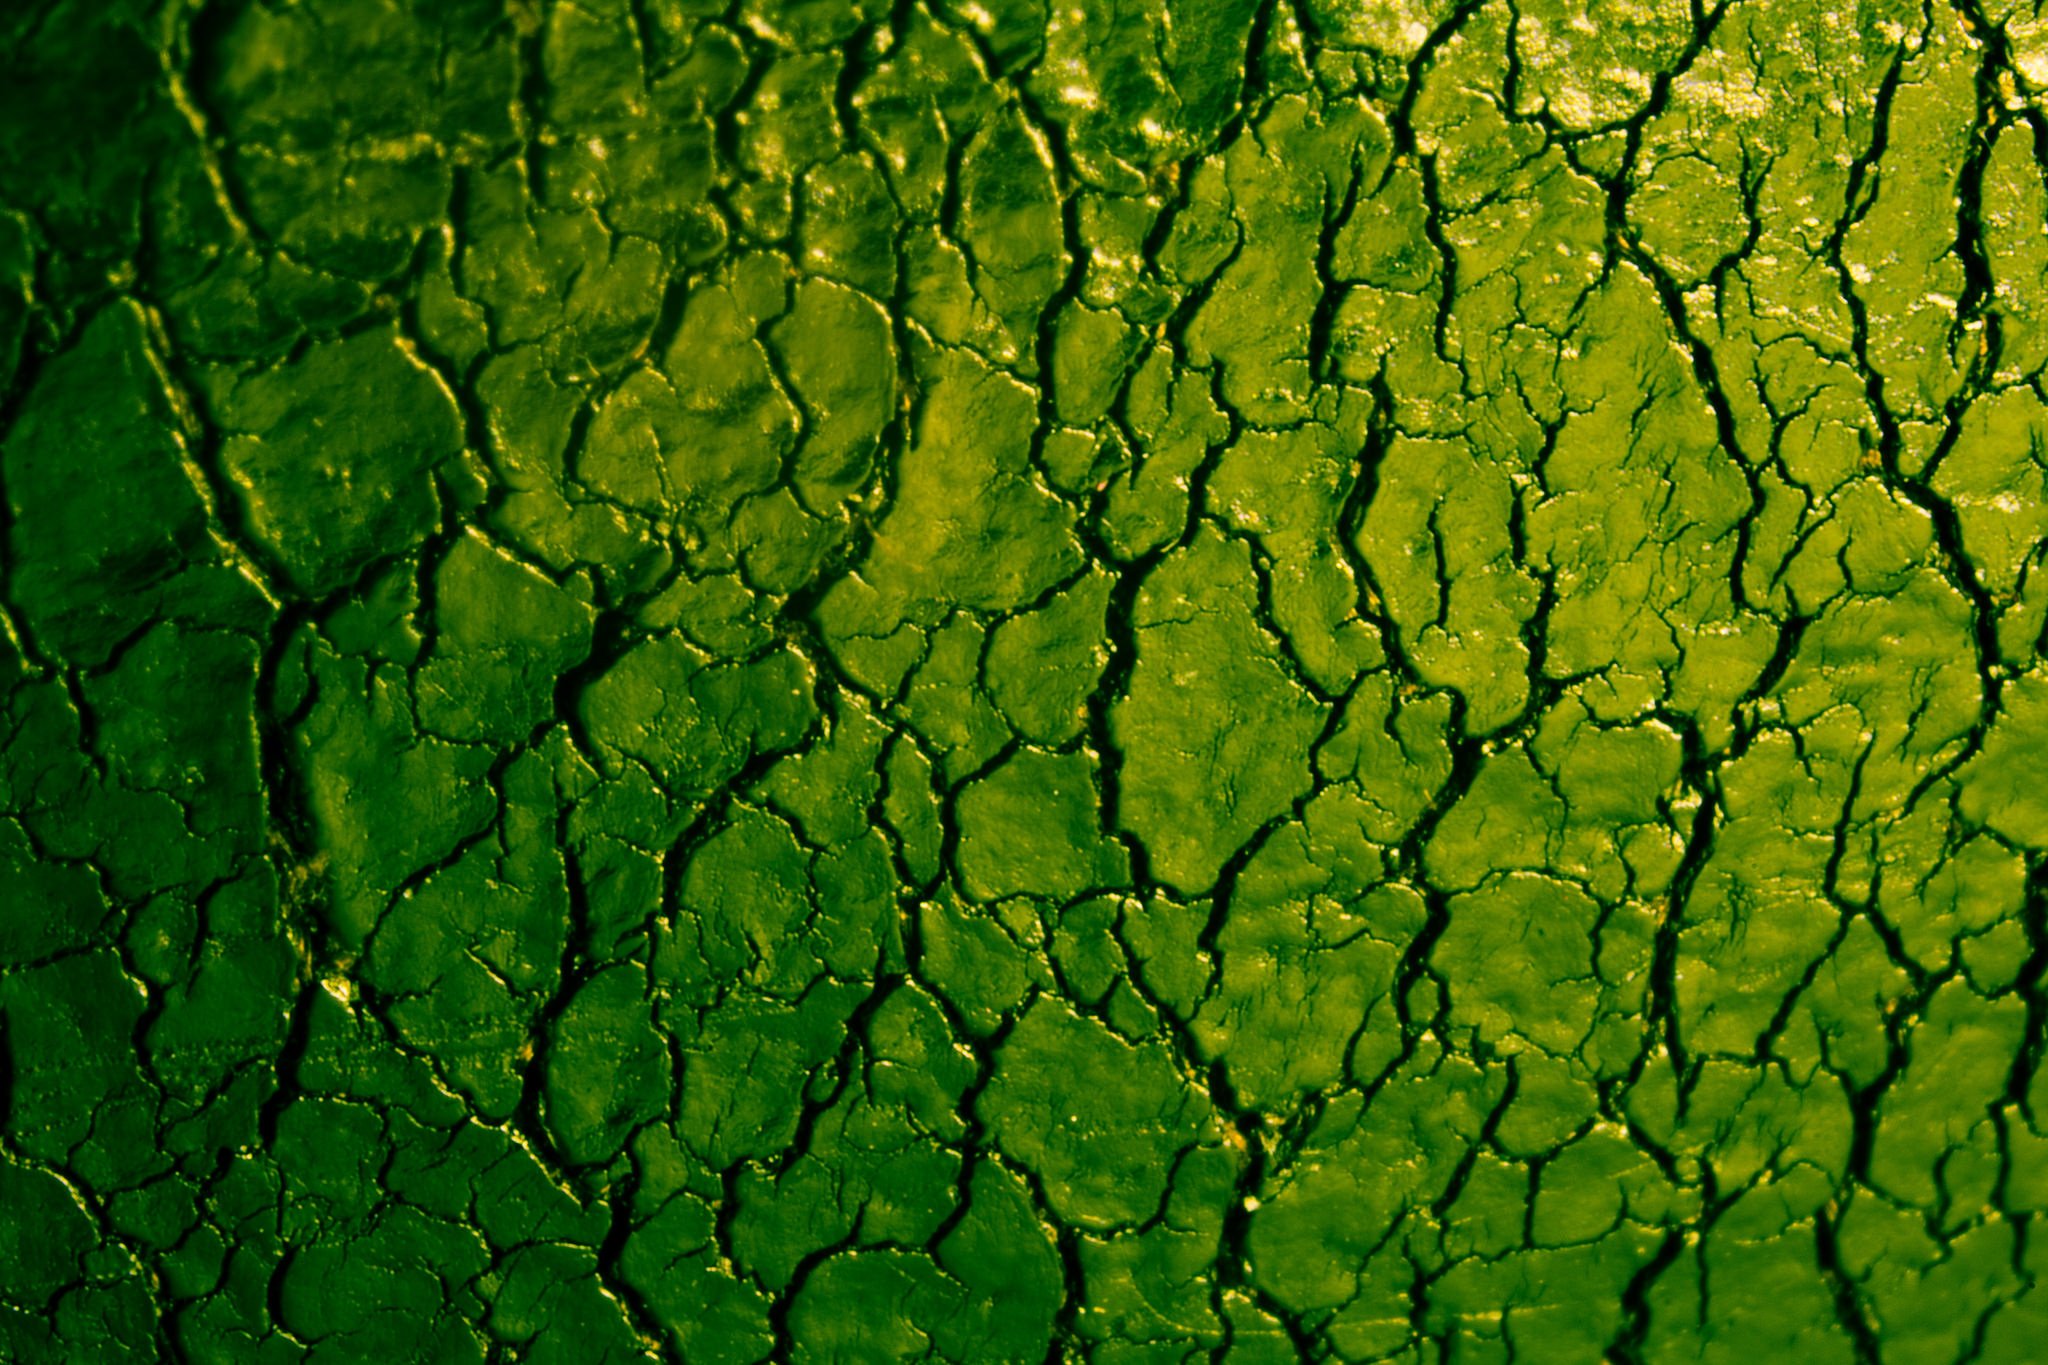 Зеленые трещины